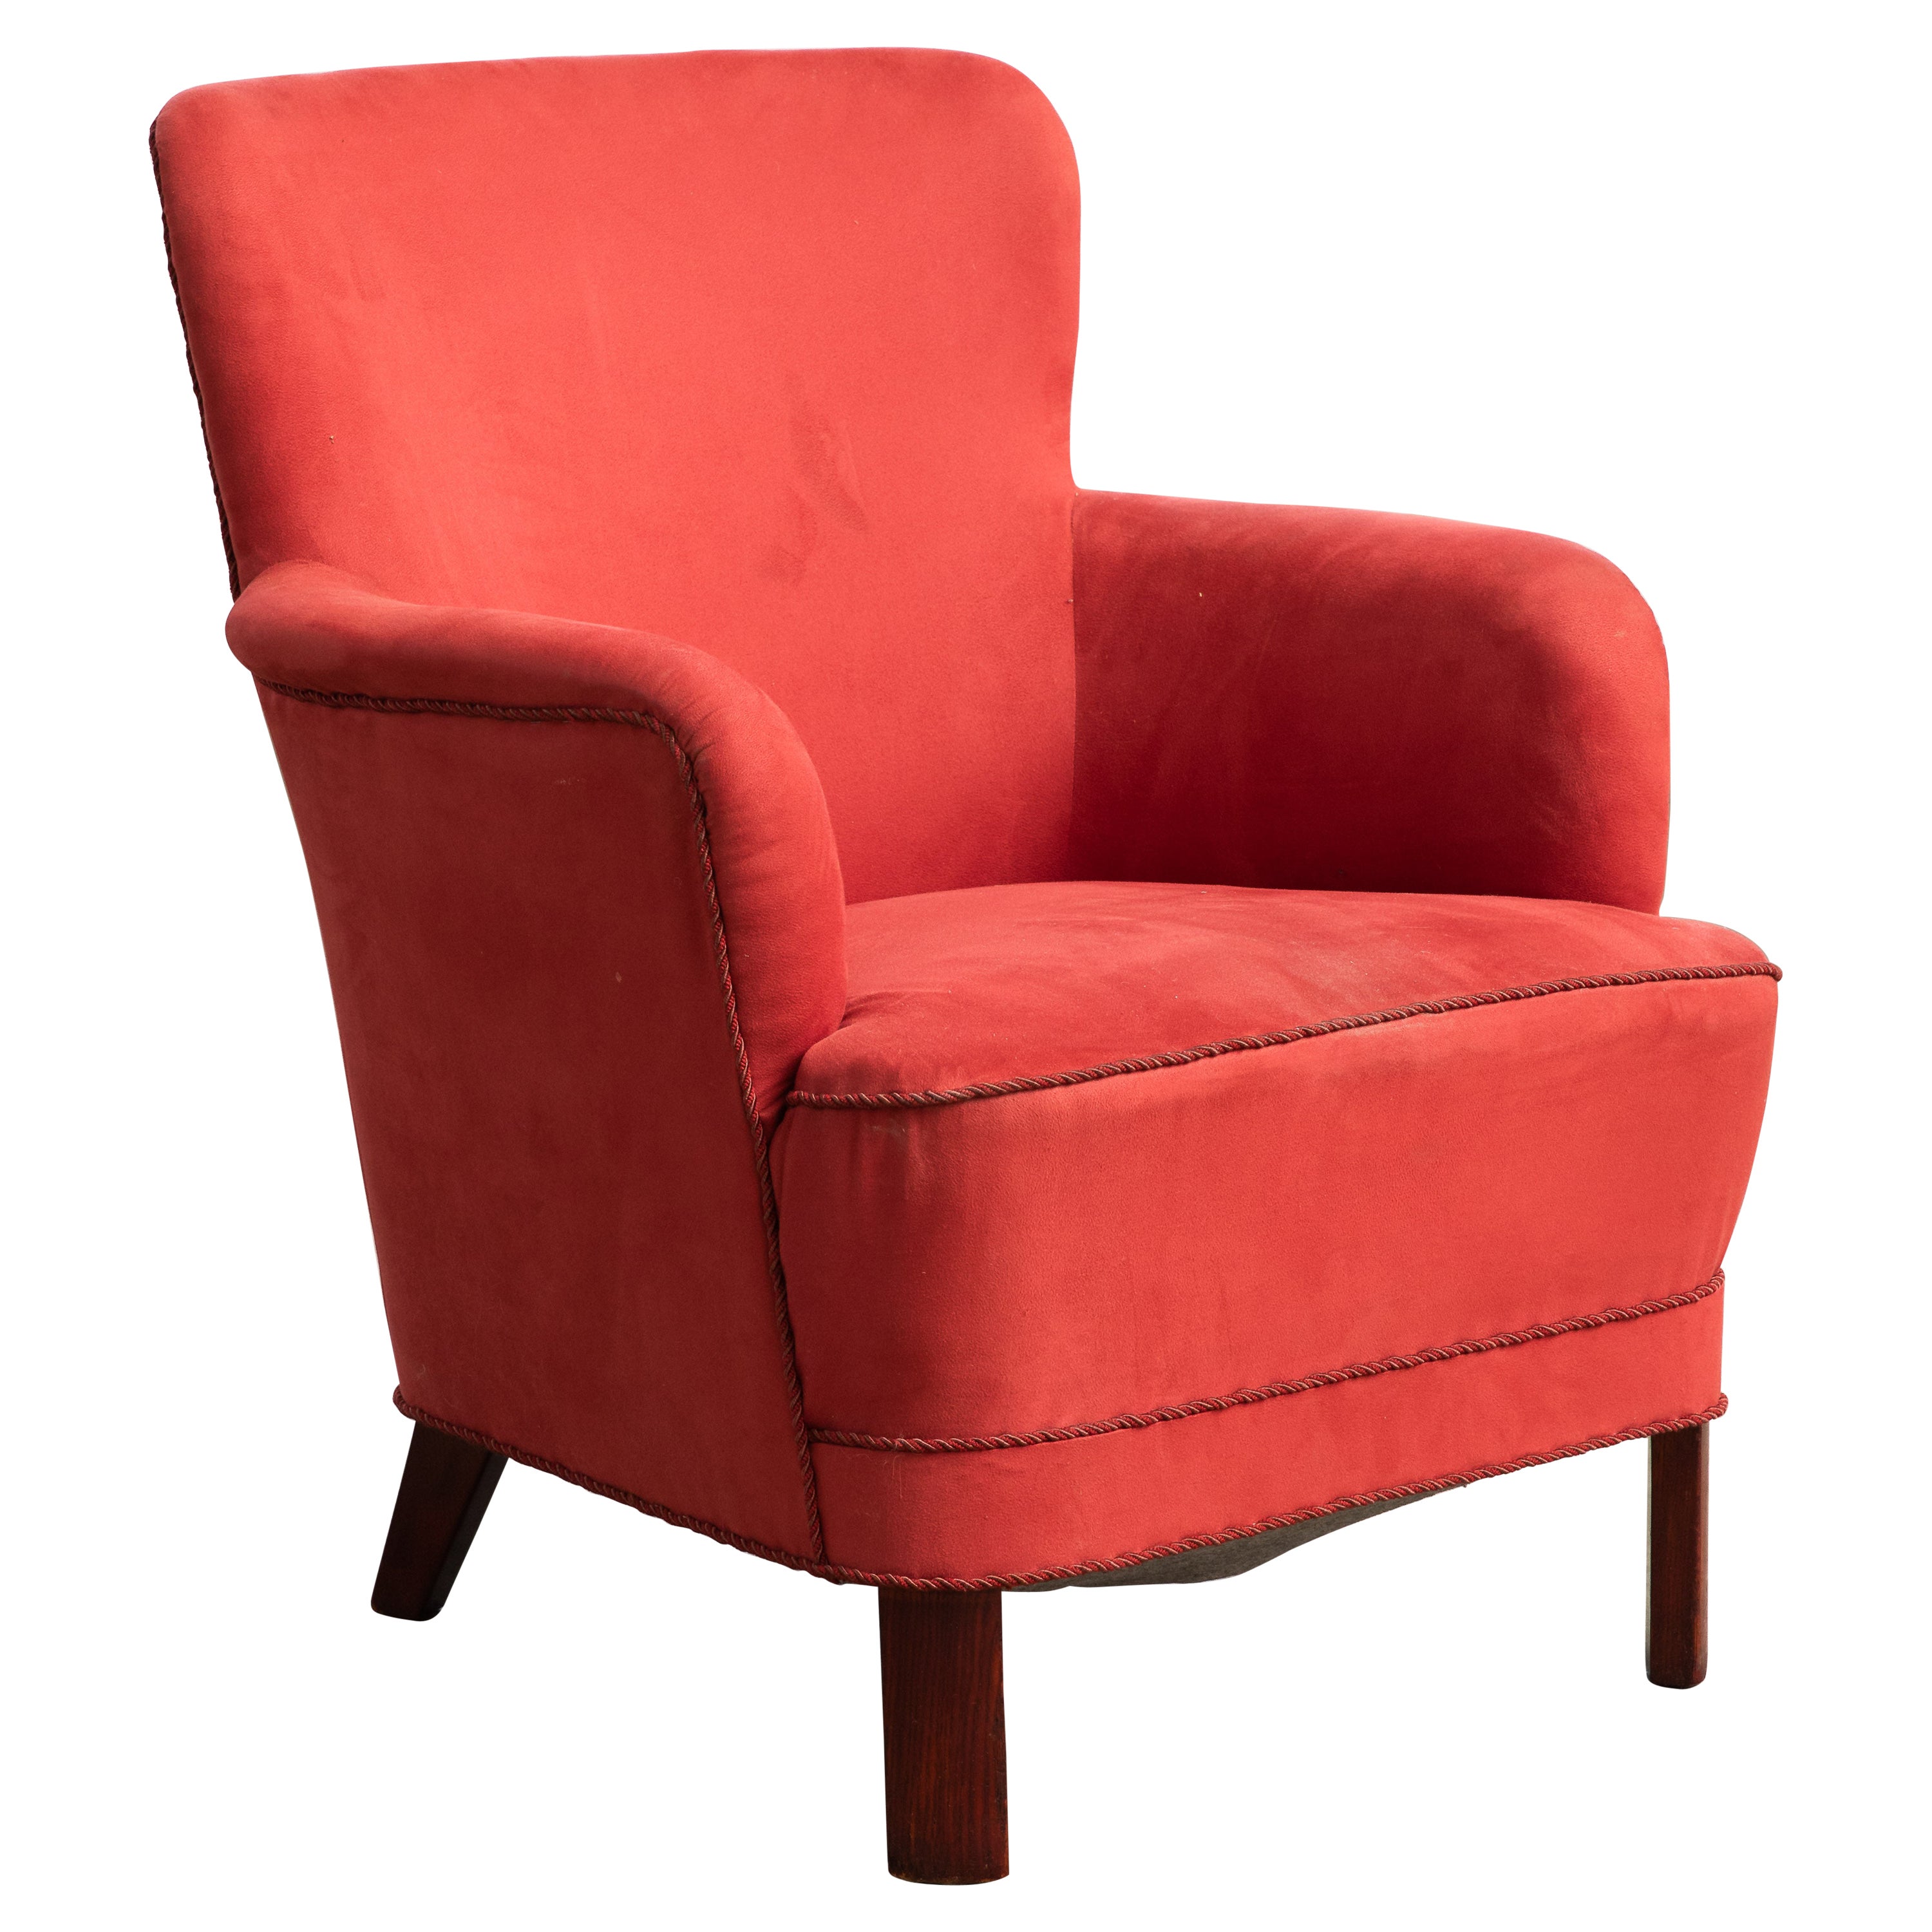 Danish 1950's Lounge Chair Attributed to Peter Hvidt & Orla Mølgaard-Nielsen